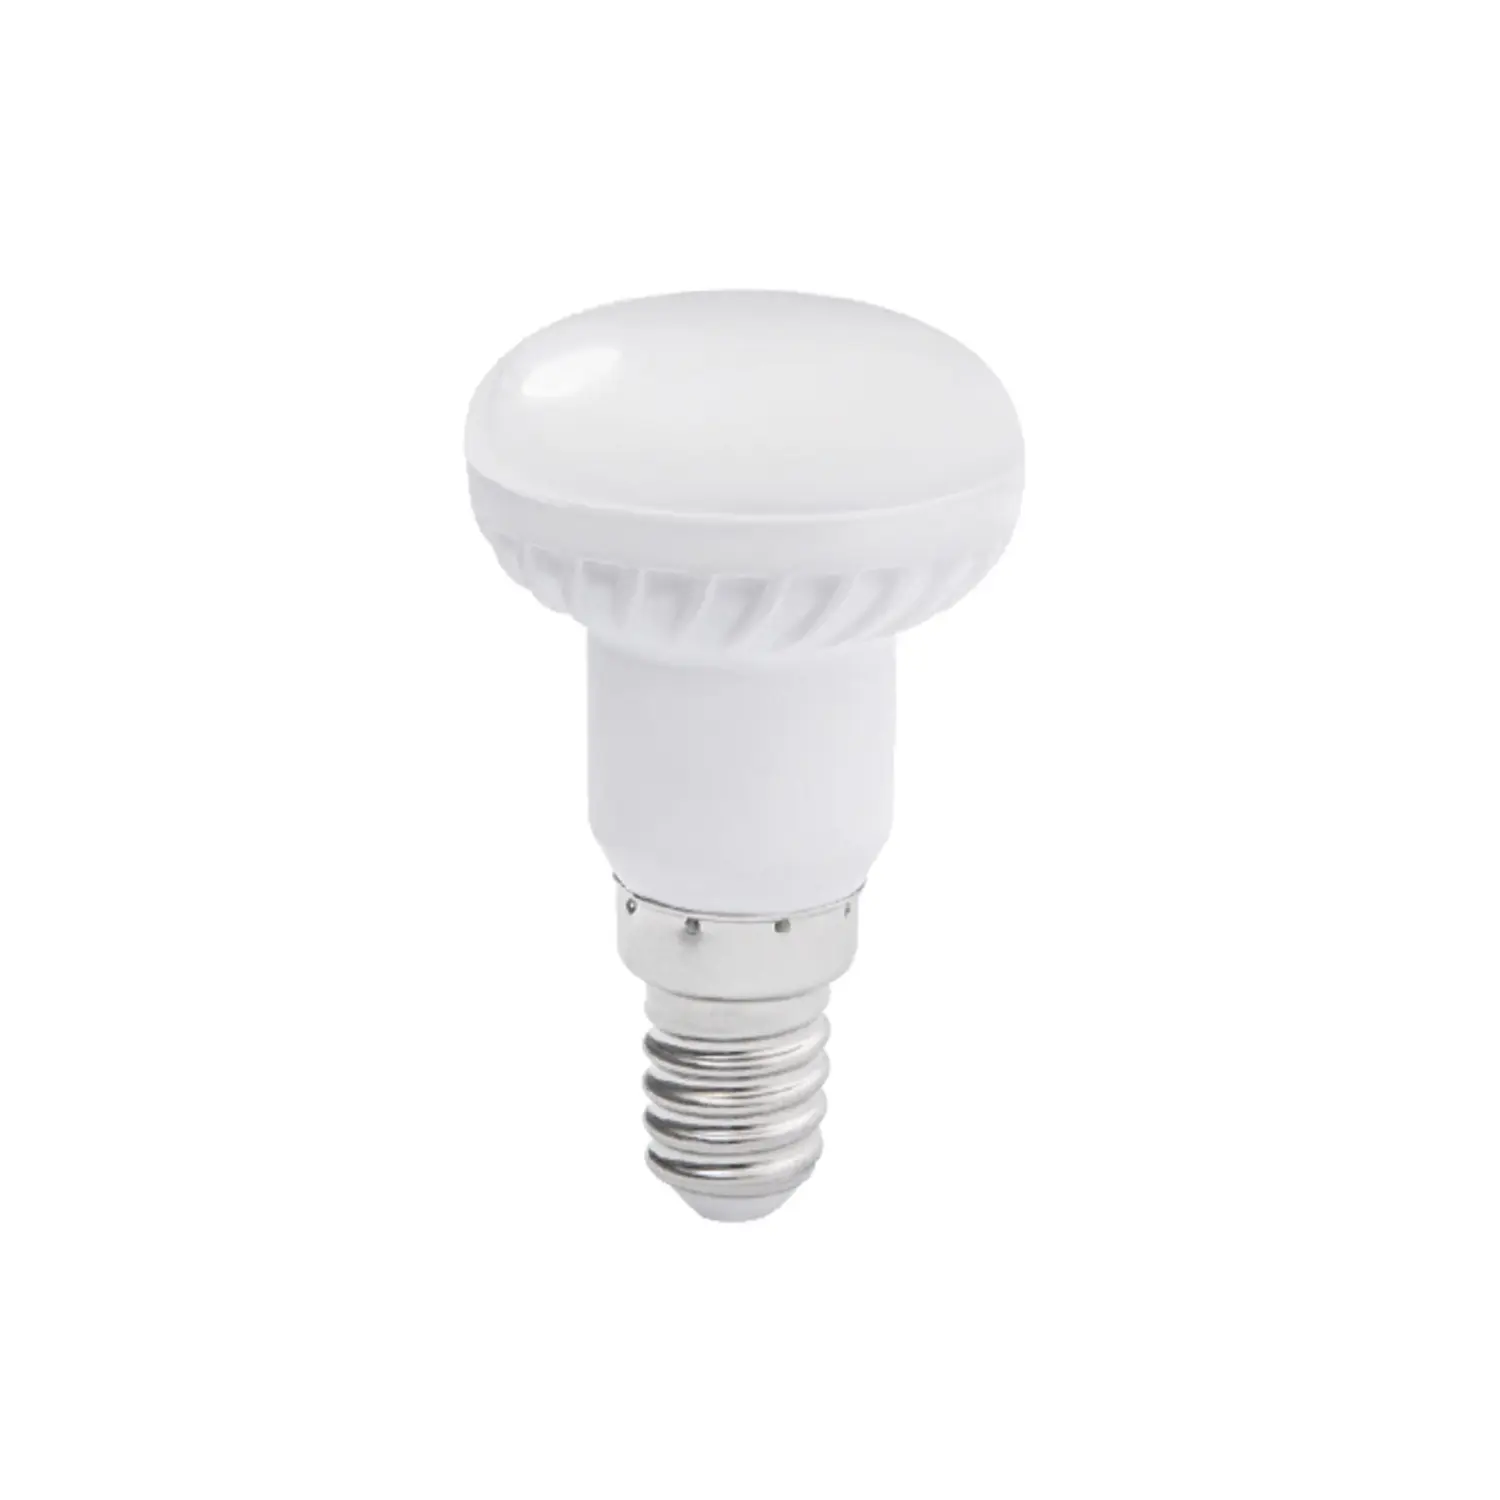 immagine lampadina spot led 3 watt E14 CE bianco caldo 25000 ore 220-240 volt kan 22730